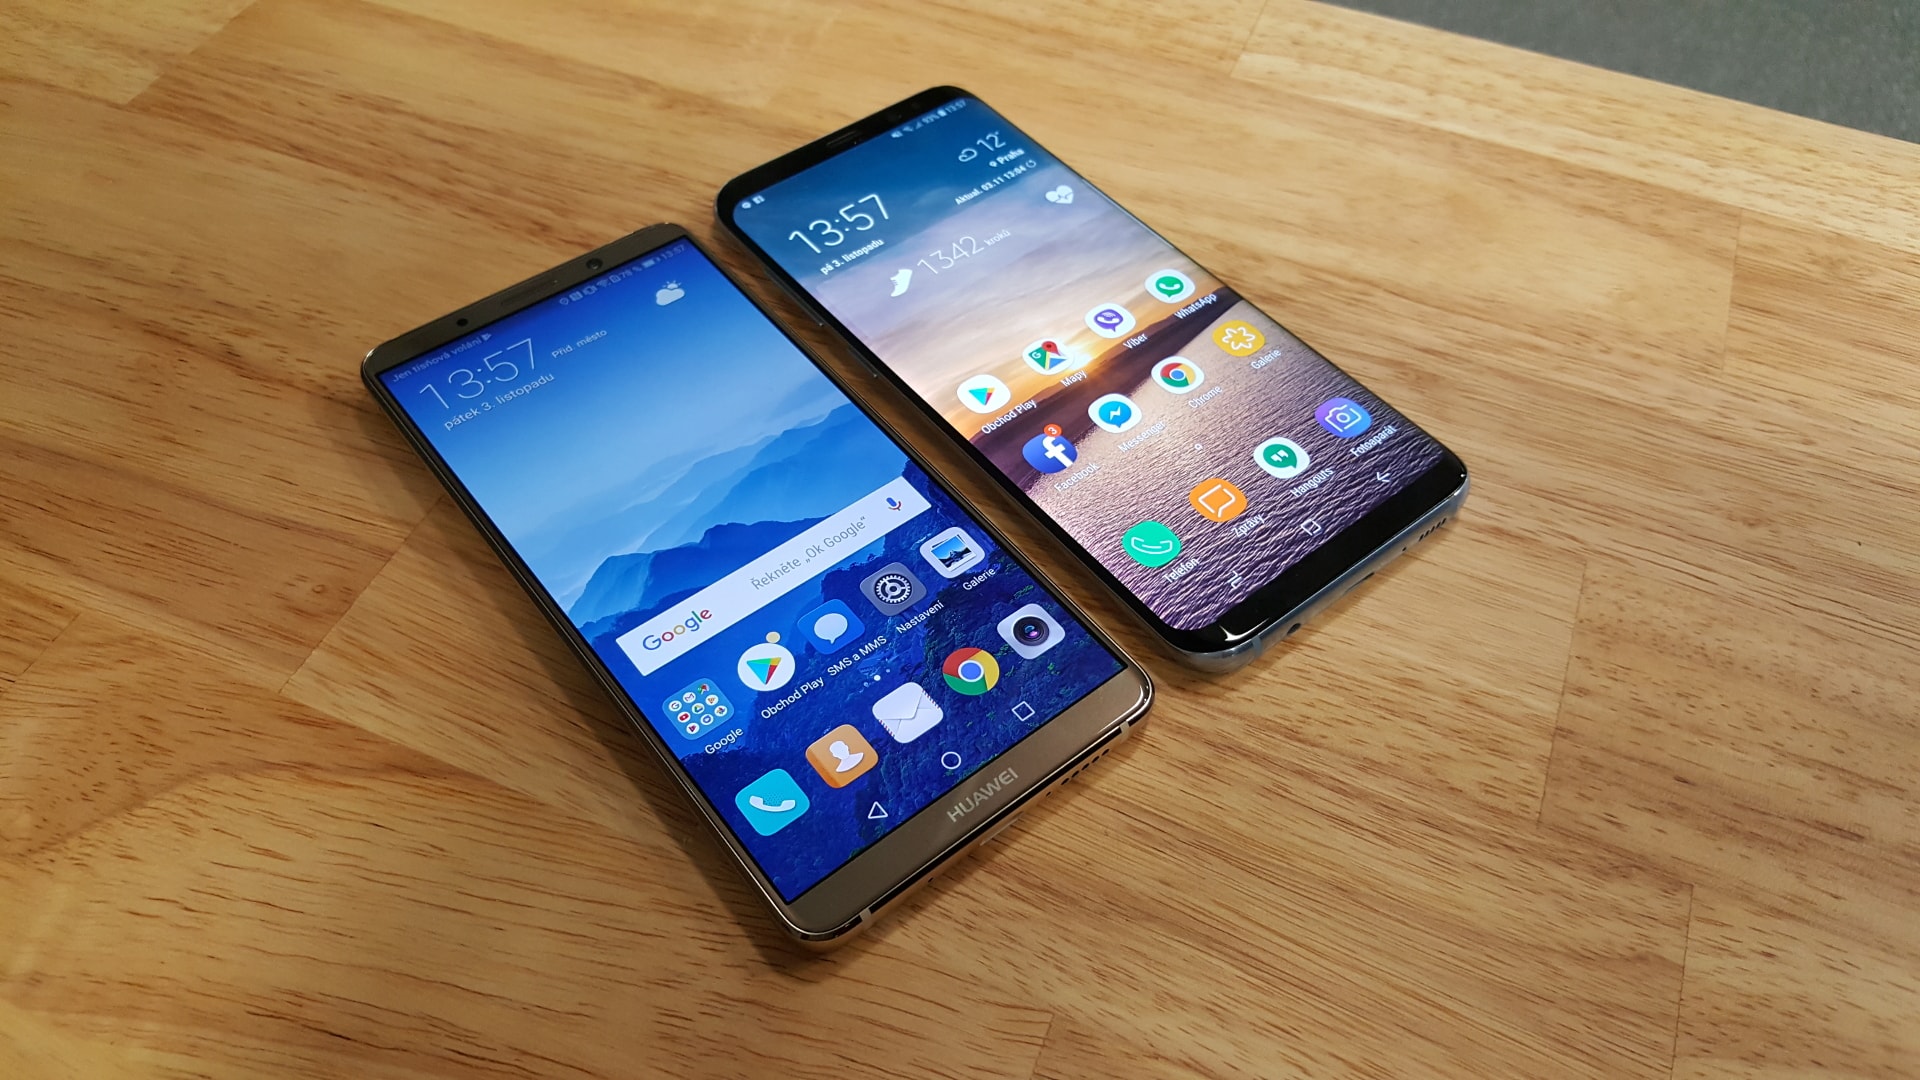 Huawei mate 10 pro vs samsung s8